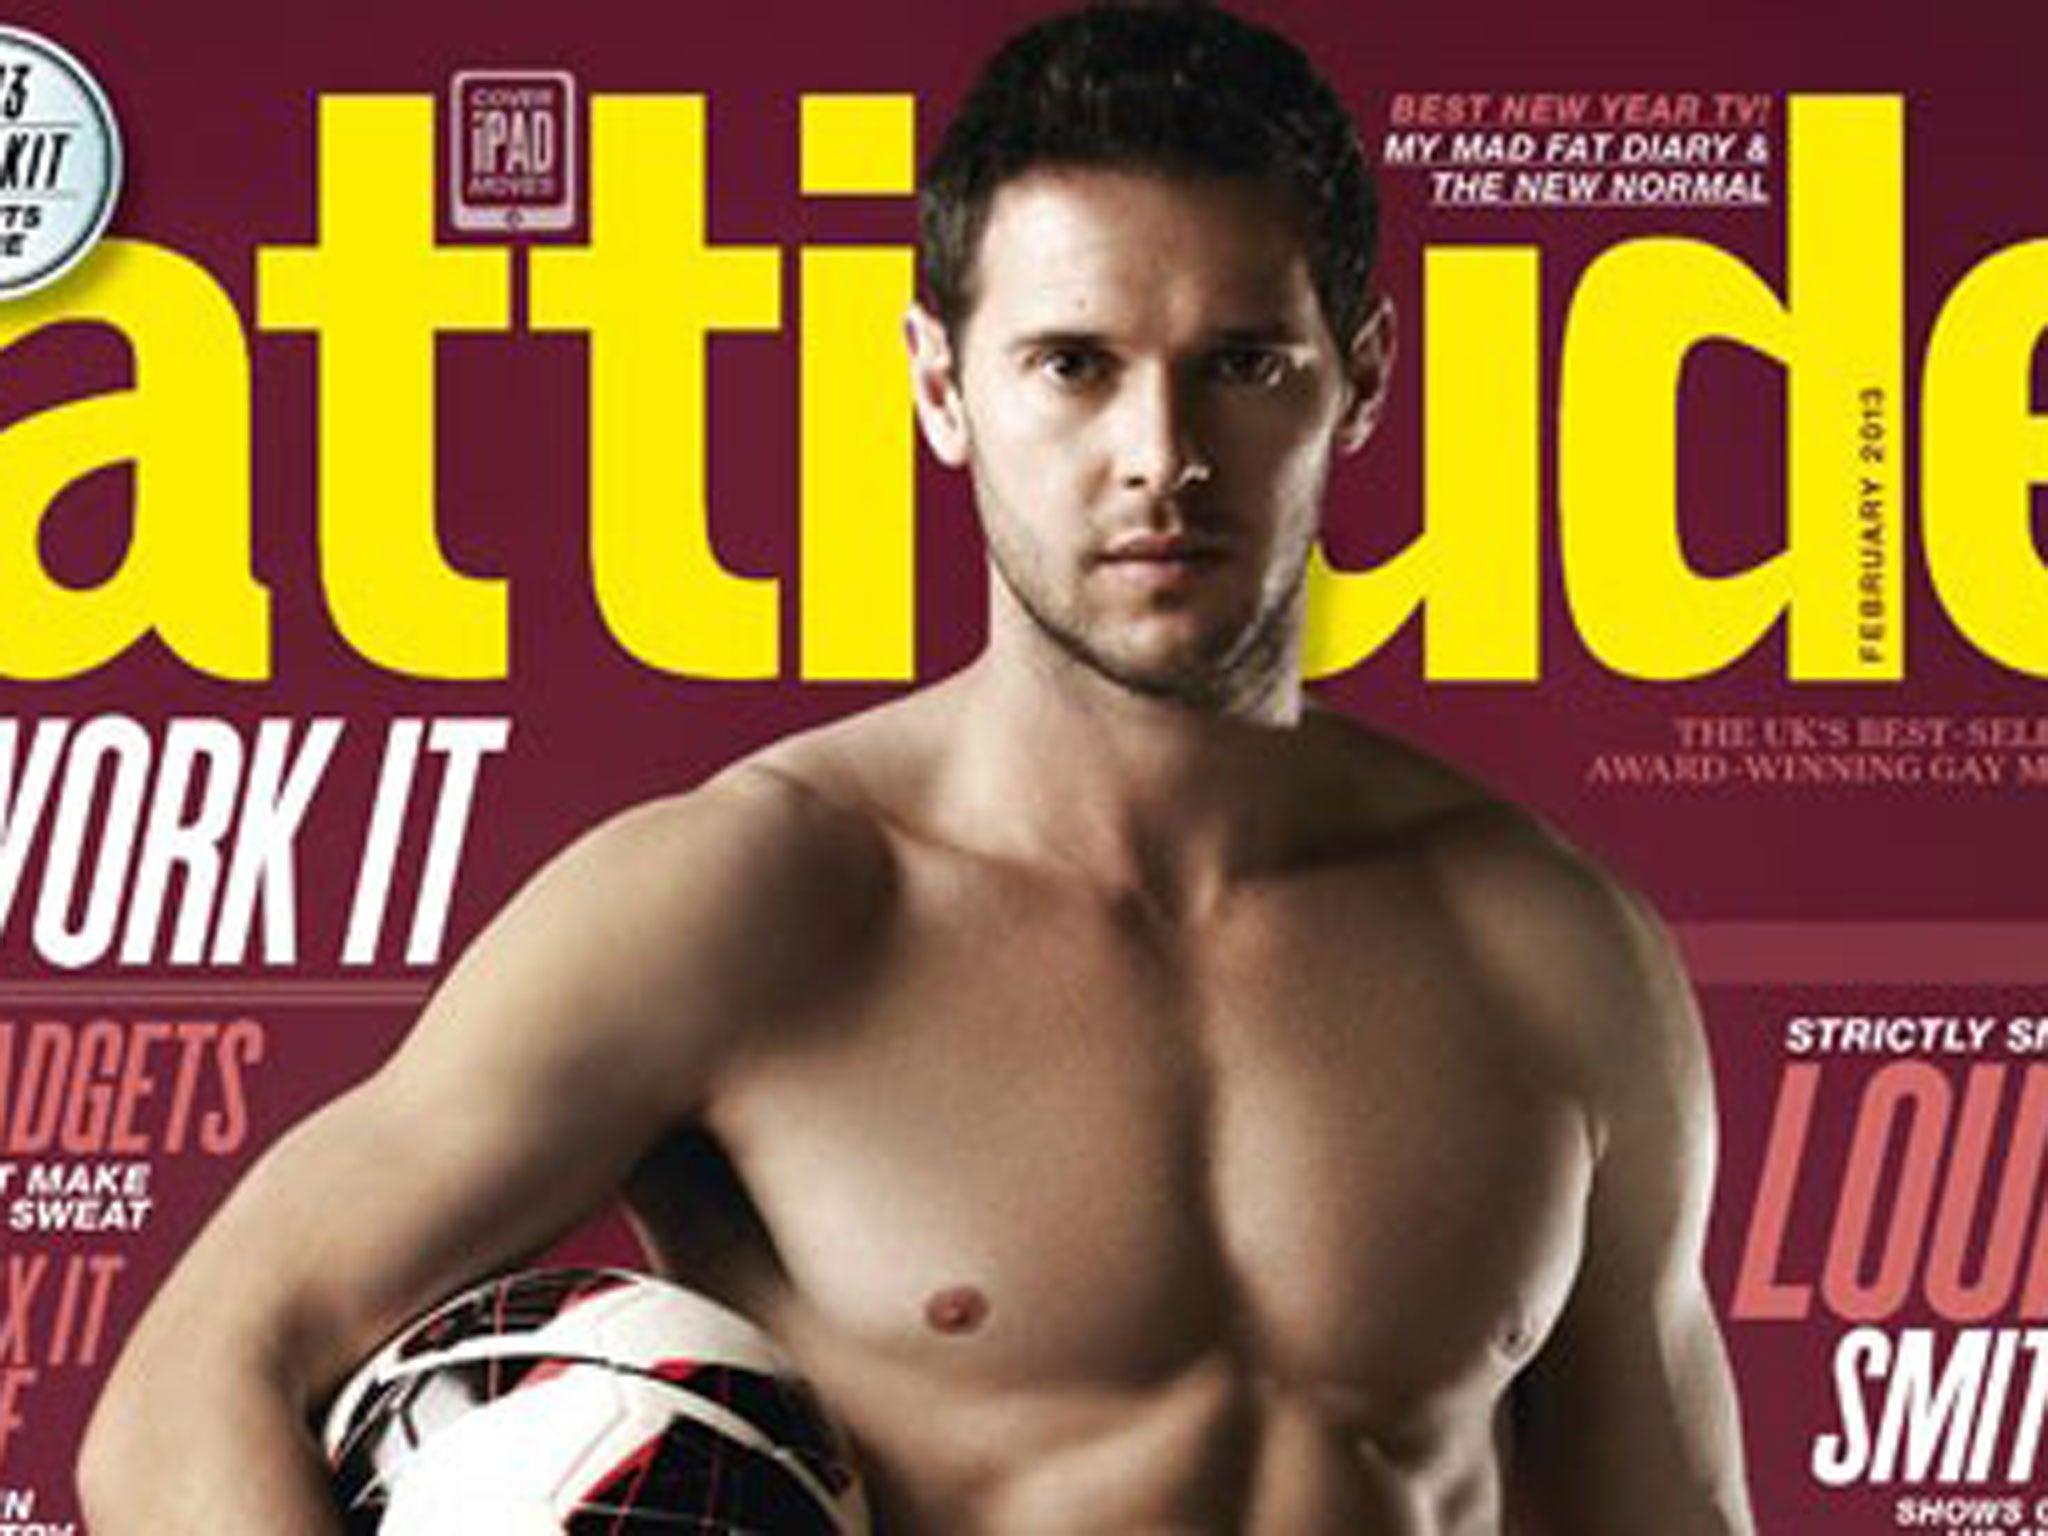 Matt Jarvis poses on the cover of ‘Attitude’ magazine